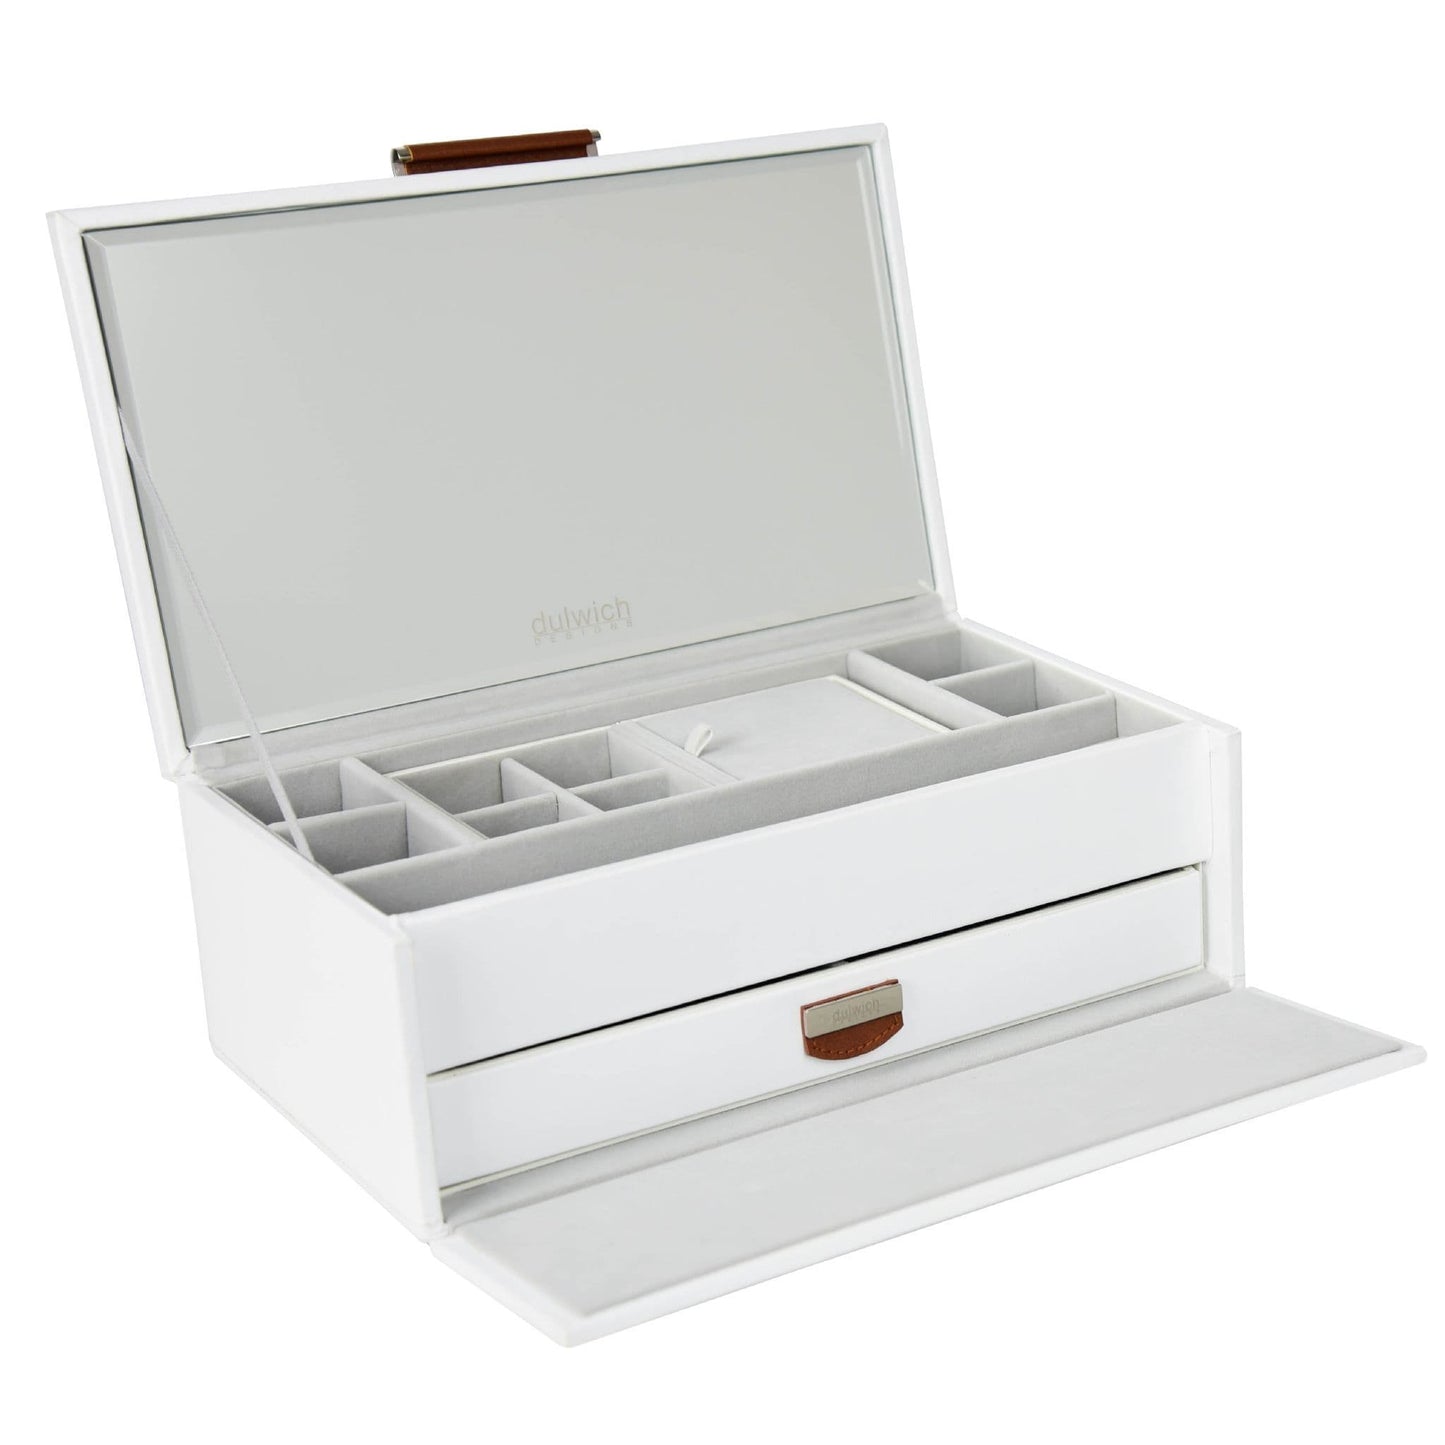 71107 Dulwich Design Medium Notting Hill White Jewellery Box